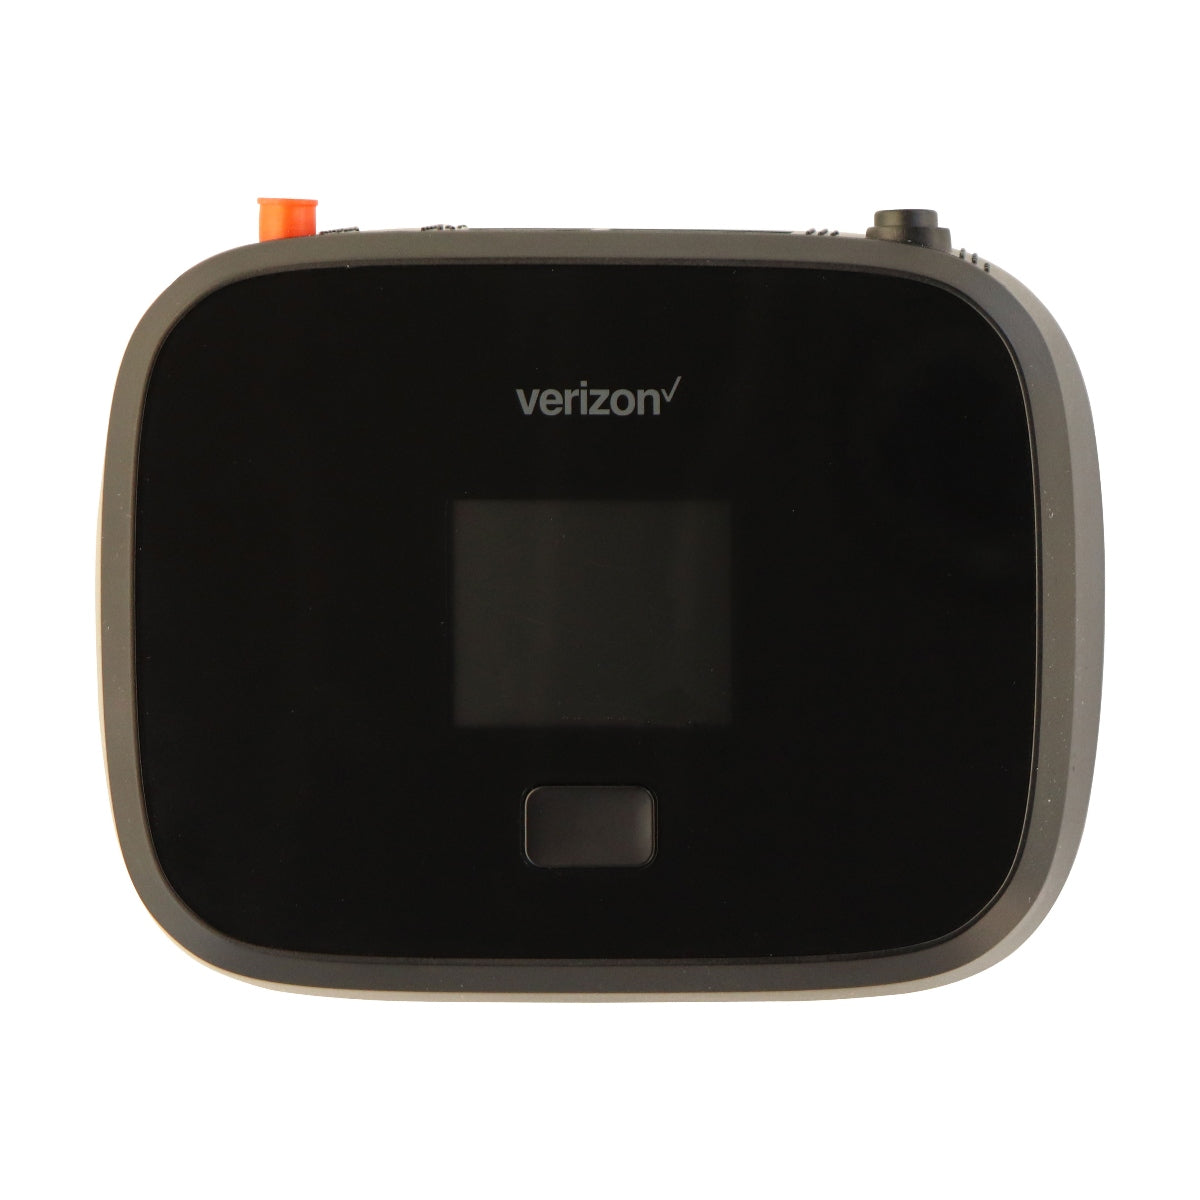 Novatel Verizon Wireless 4G LTE Home Phone Connect NOVT2000 Black Home Improvement - Home Telephones & Accessories Verizon    - Simple Cell Bulk Wholesale Pricing - USA Seller